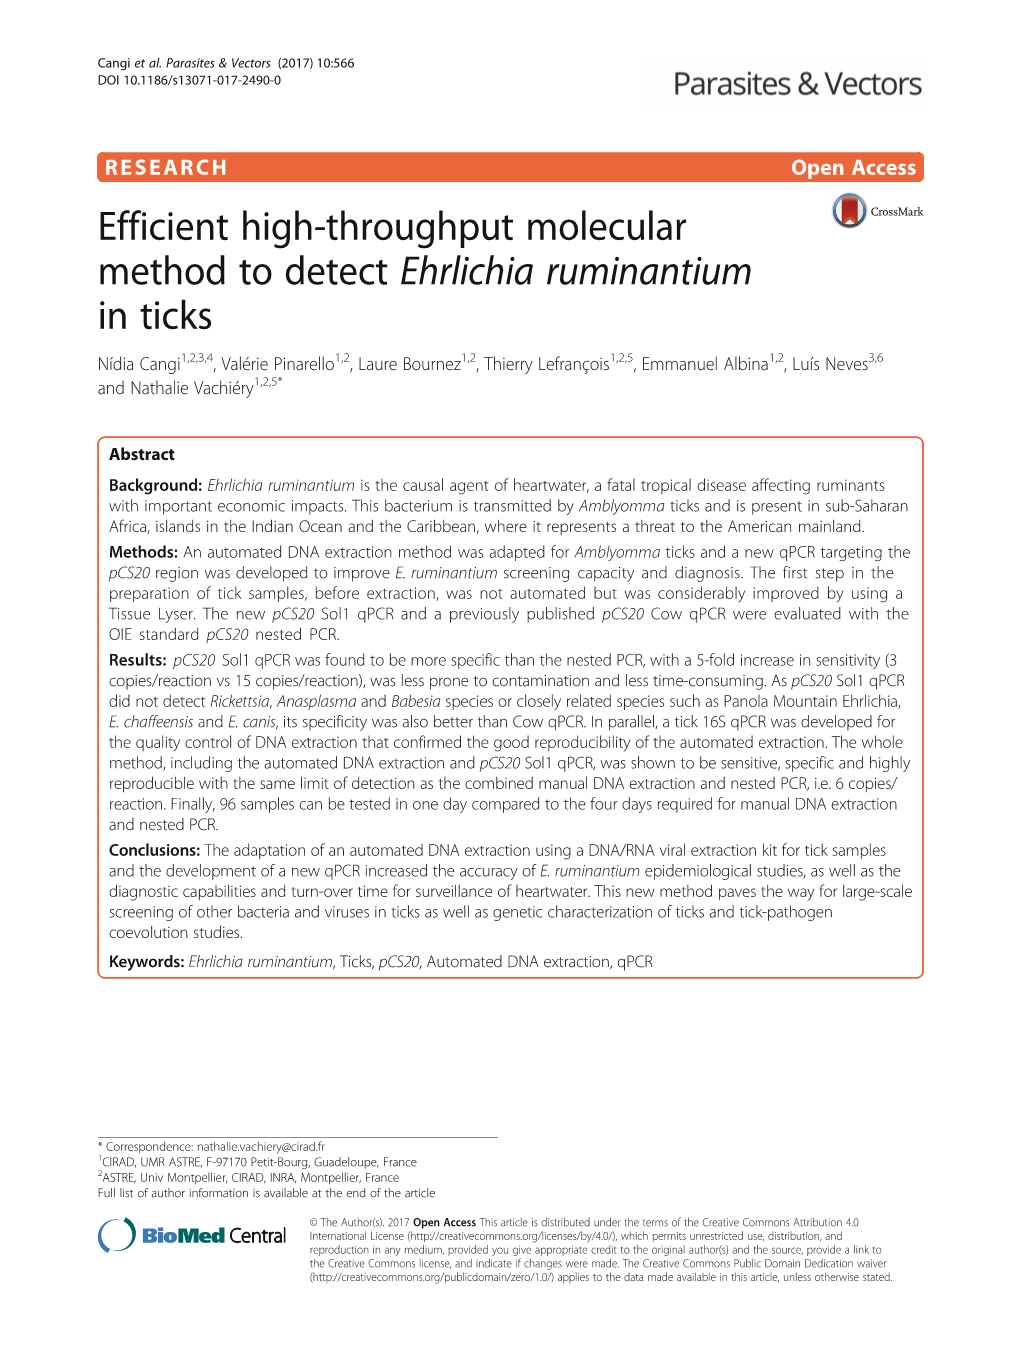 Efficient High-Throughput Molecular Method to Detect Ehrlichia